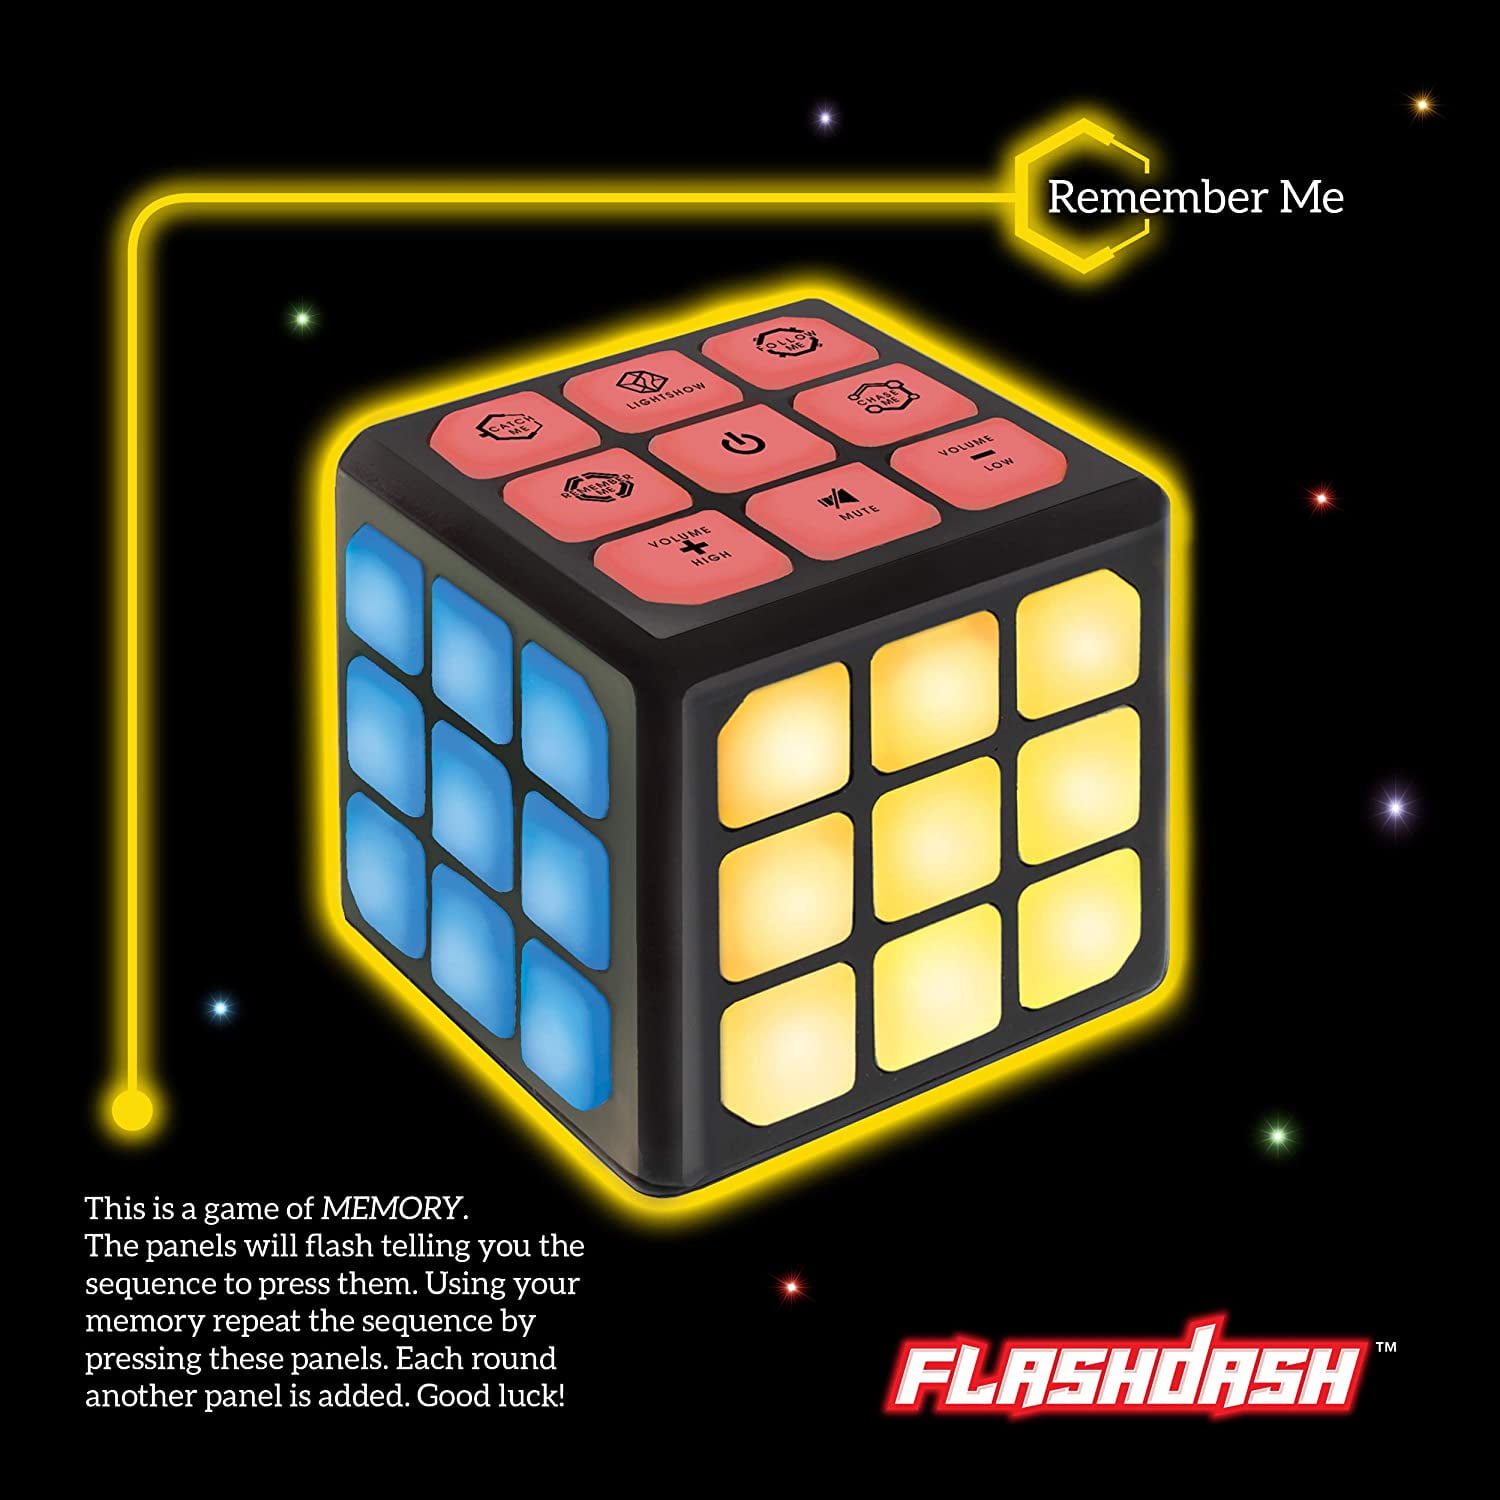 Flashing Cube Electronic Memory & Brain Game4-in-1 Handheld Game for KidsS 